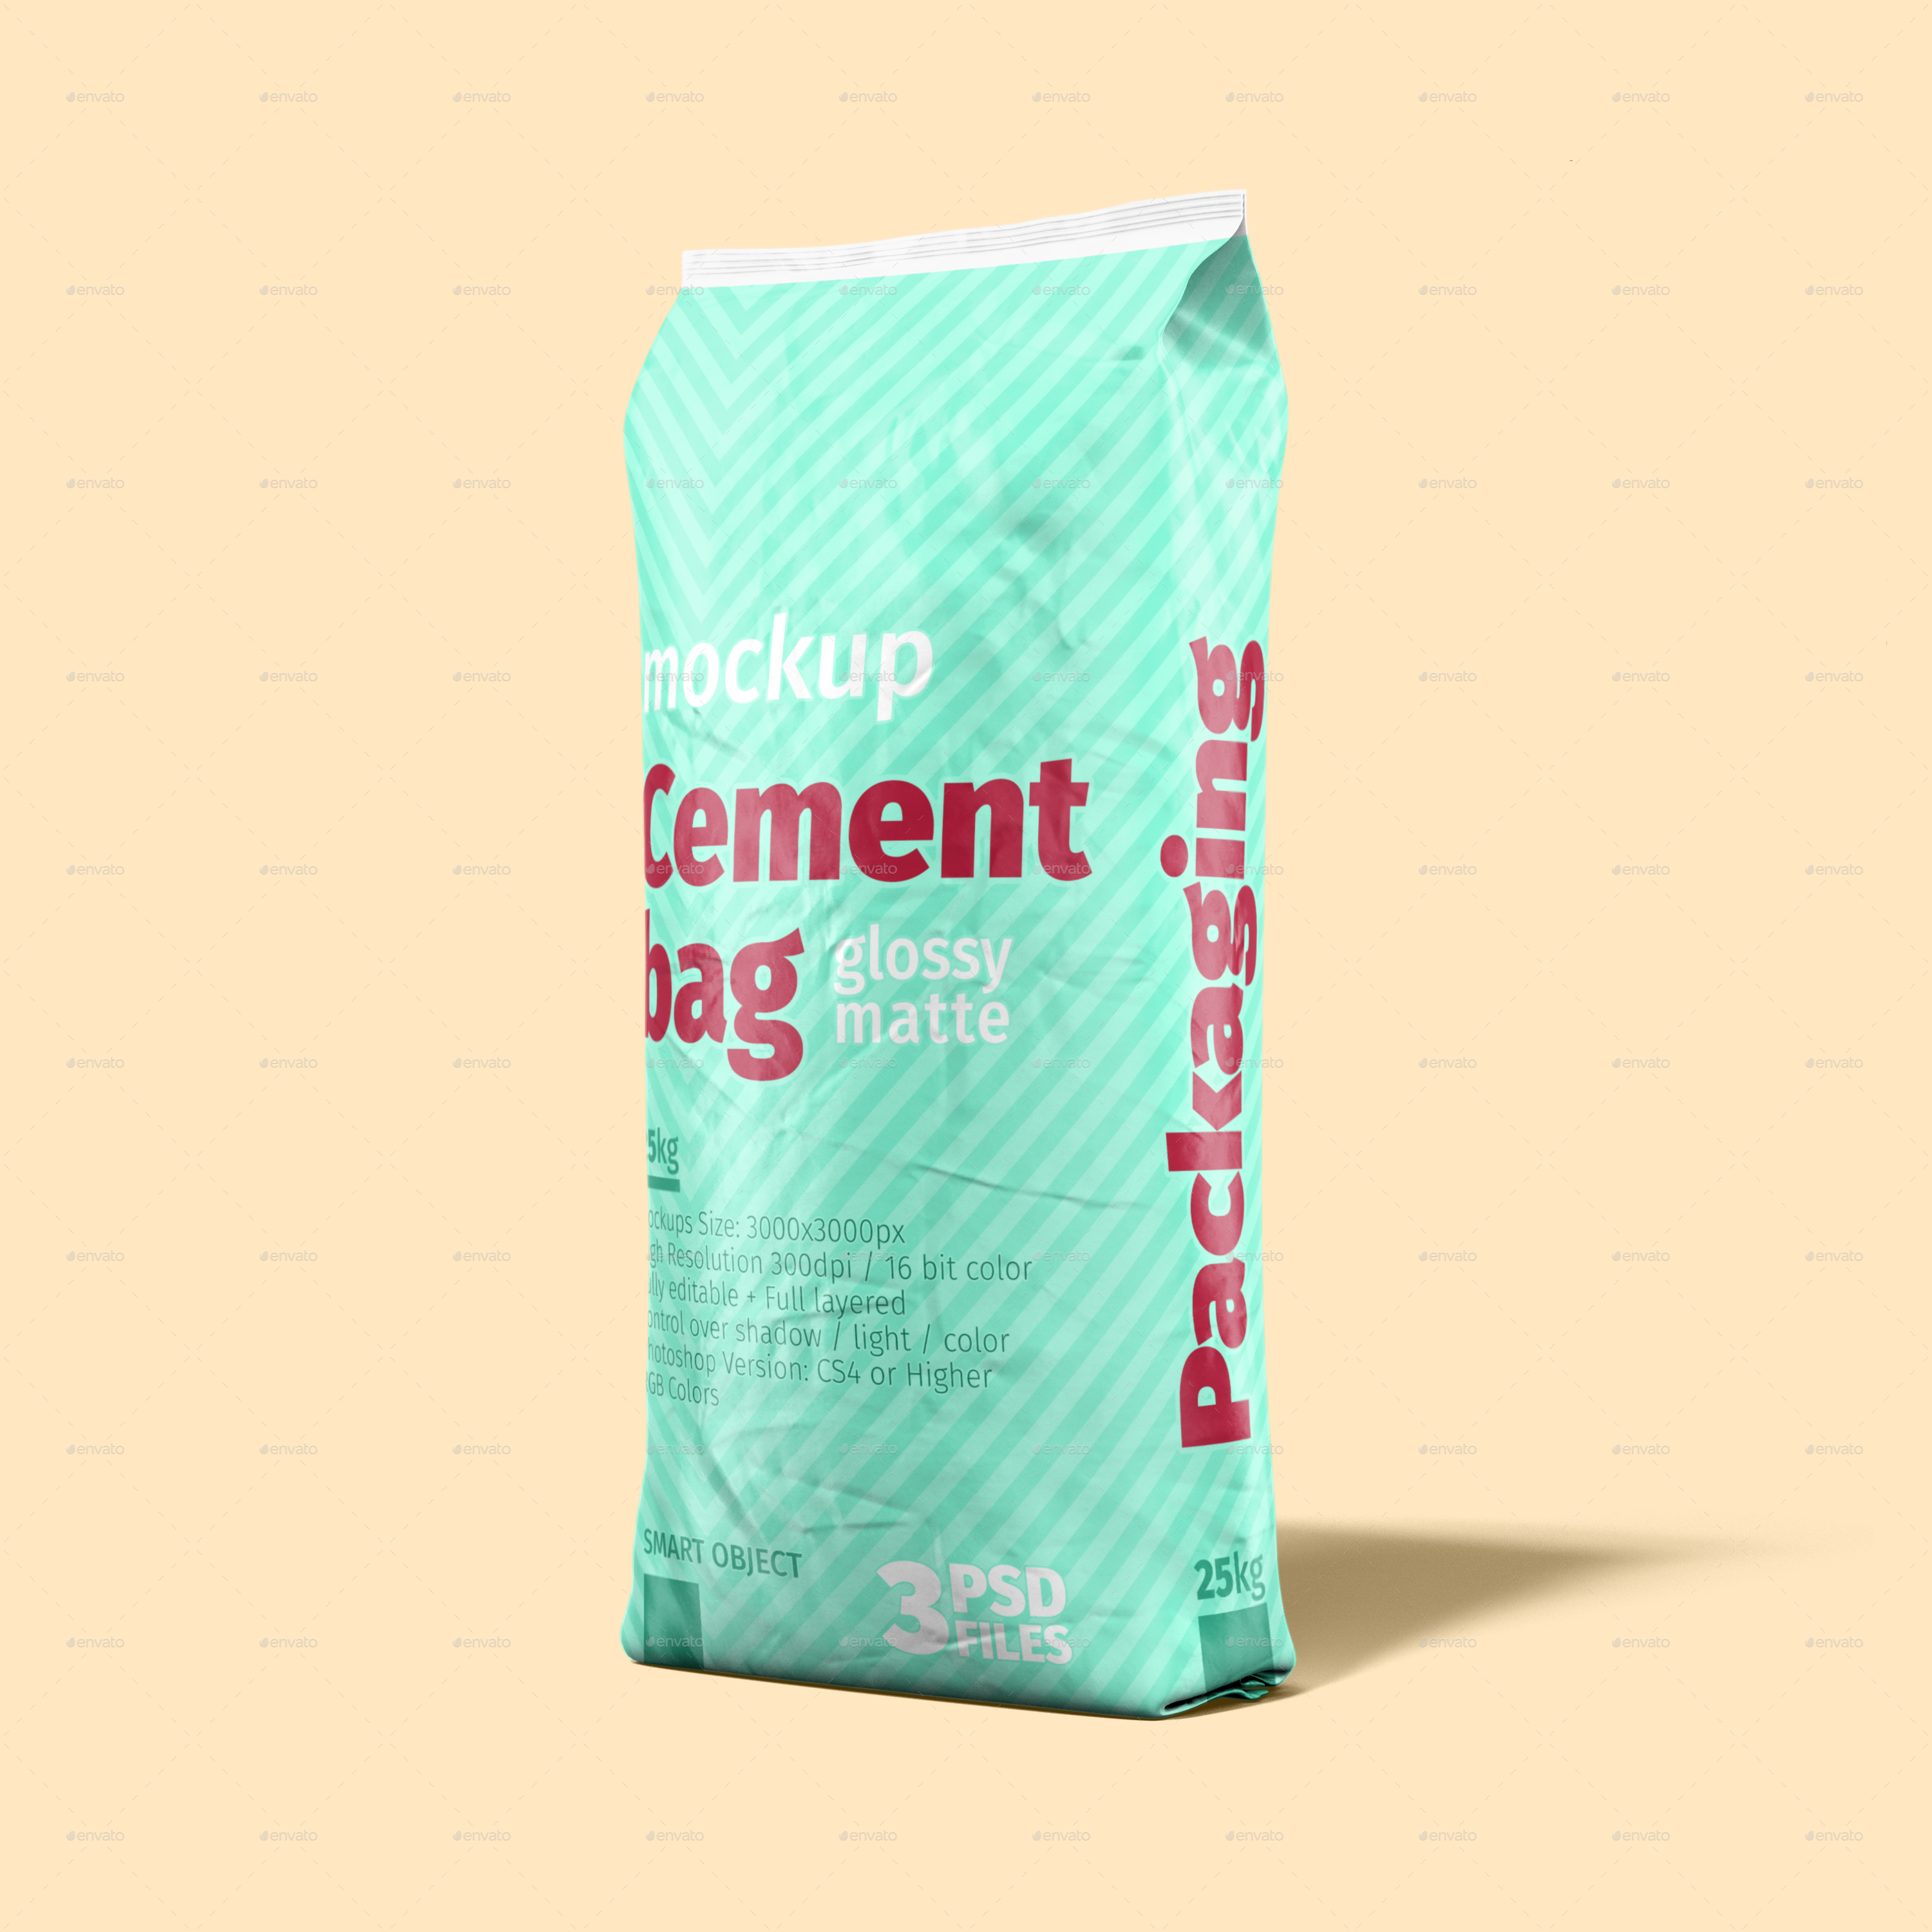 Cement Bag Mock-Up by Radetzki | GraphicRiver